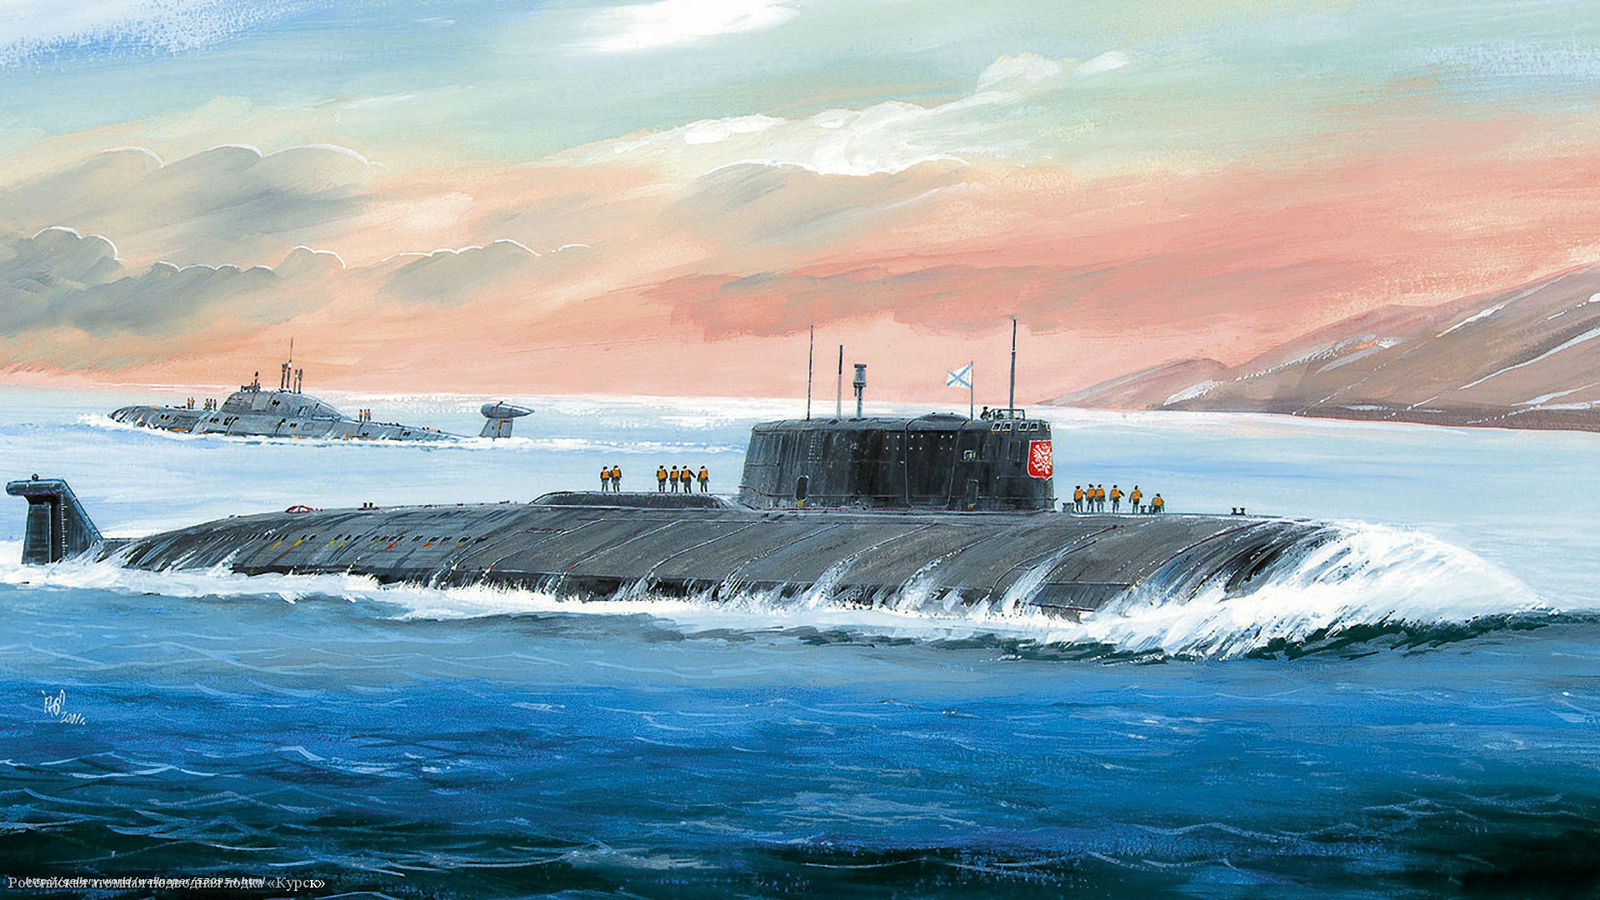 Download wallpaper submarine Premier League Kursk Navy free desktop